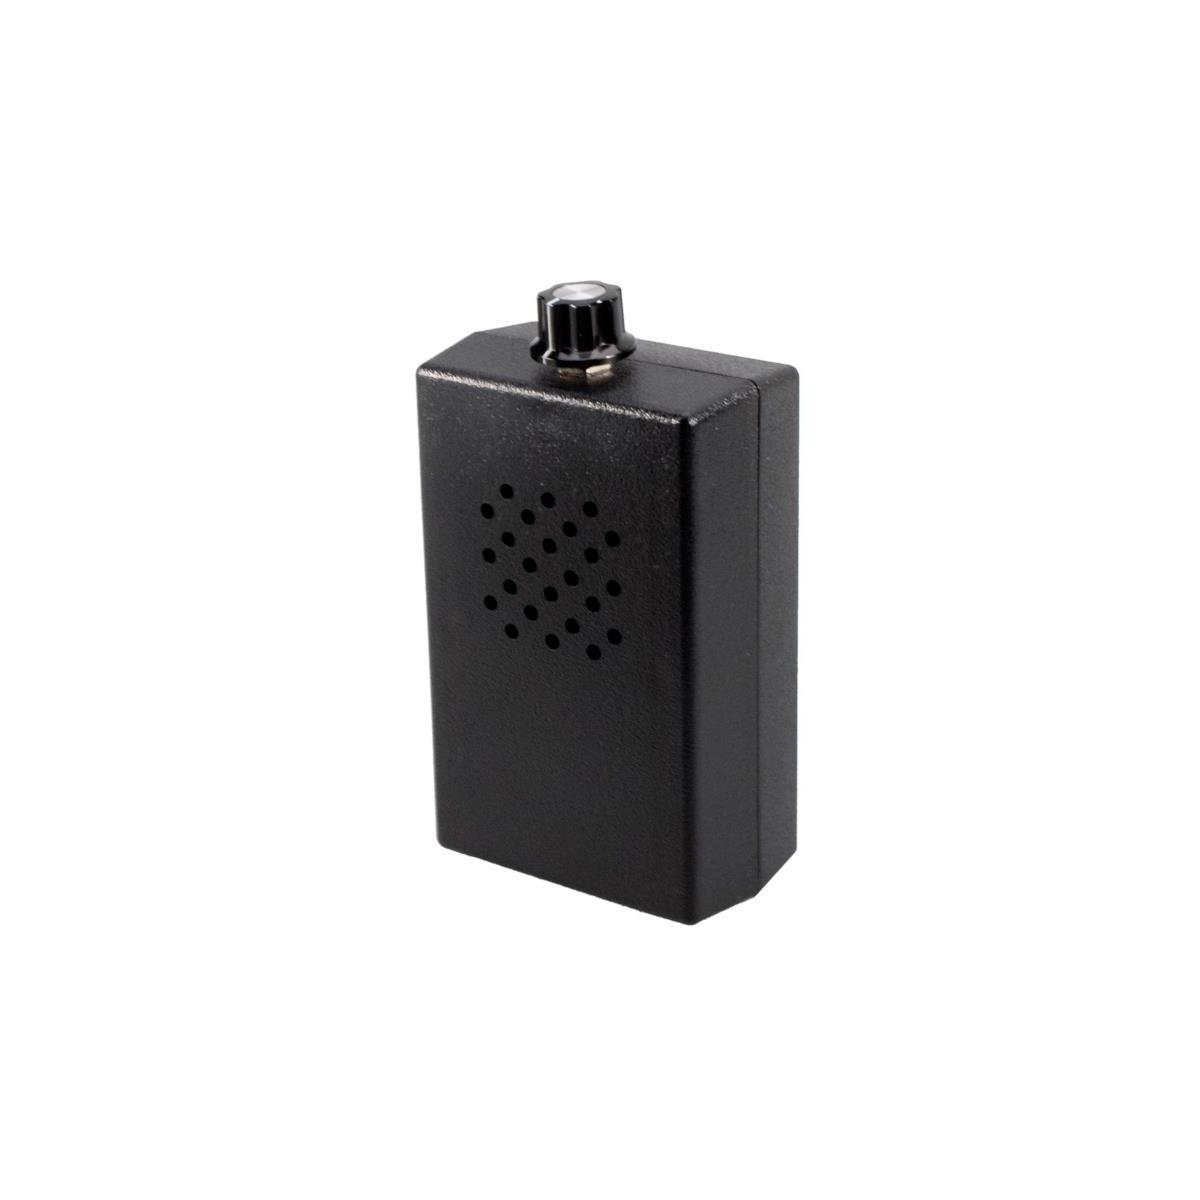 Image of KJB Security Products J1000 Handheld White Noise Generator